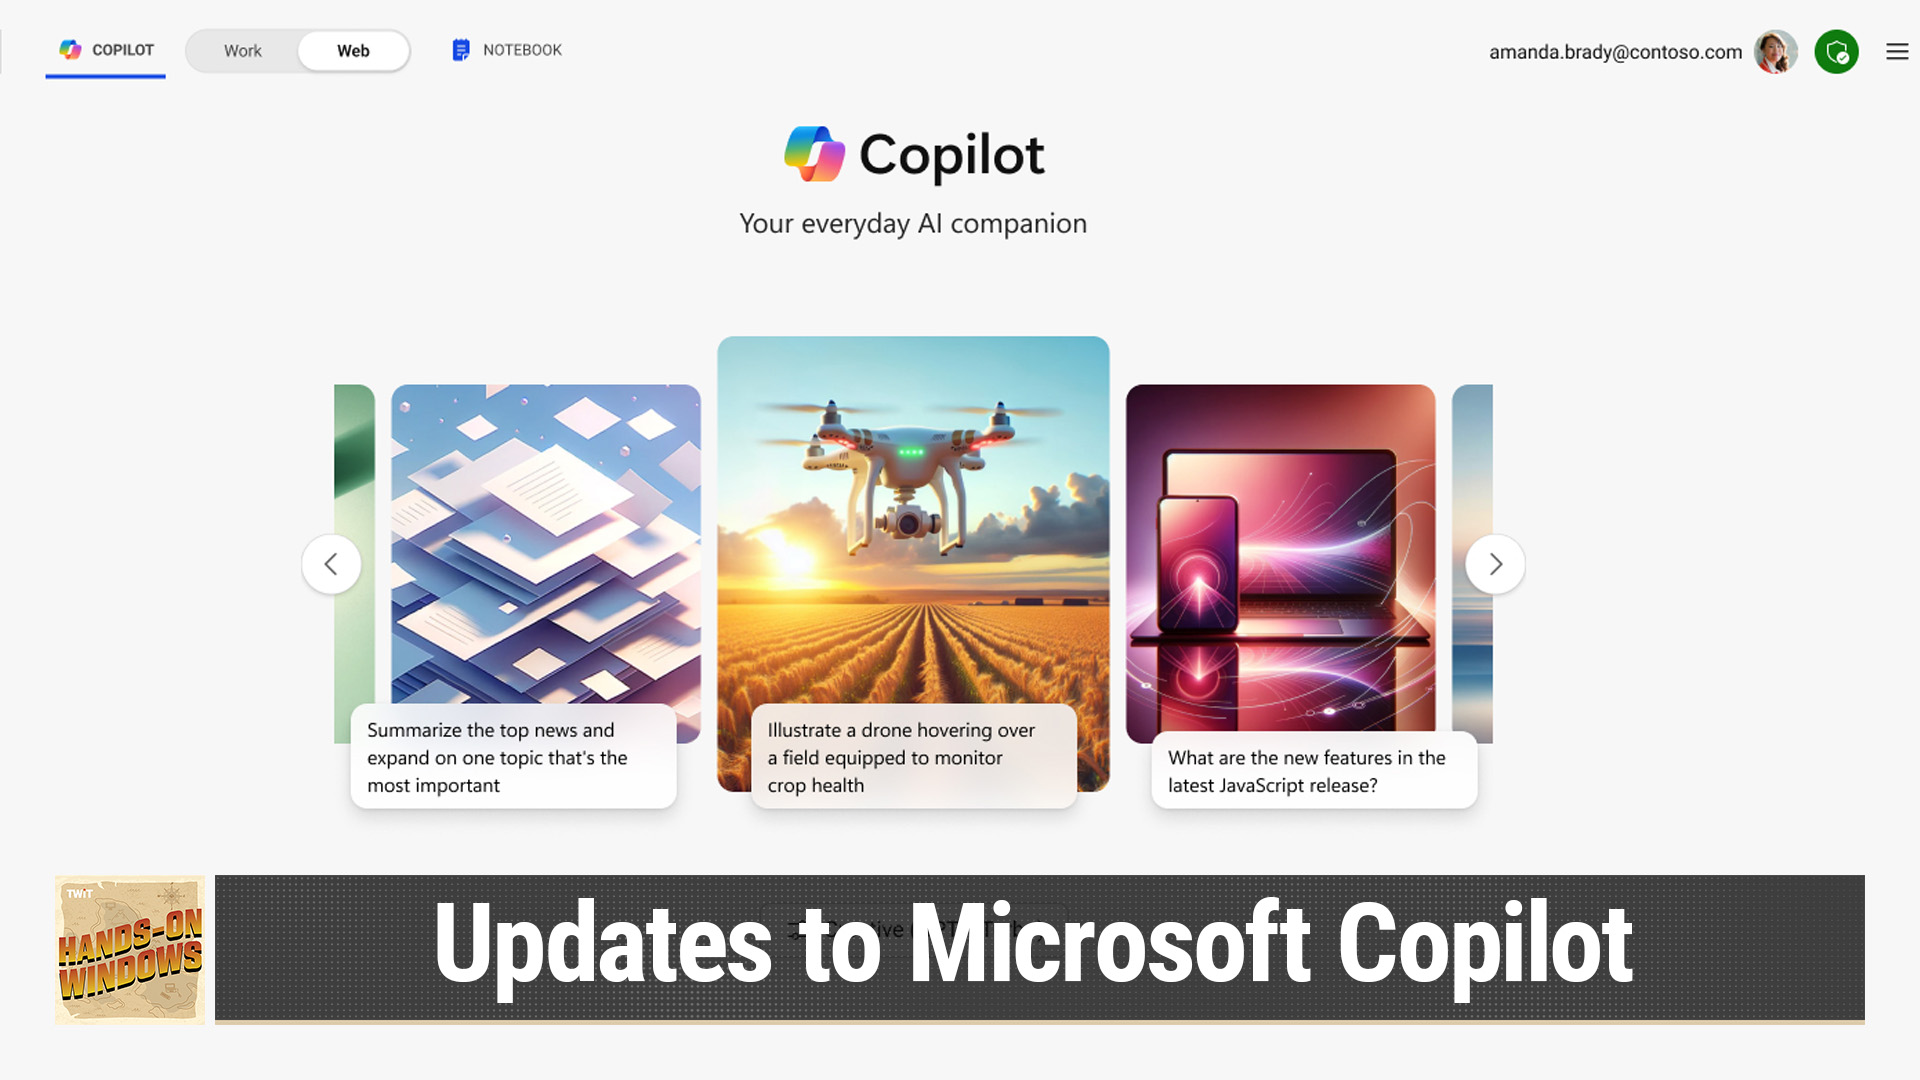 Updates to Microsoft Copilot (Hands-On Windows #85)